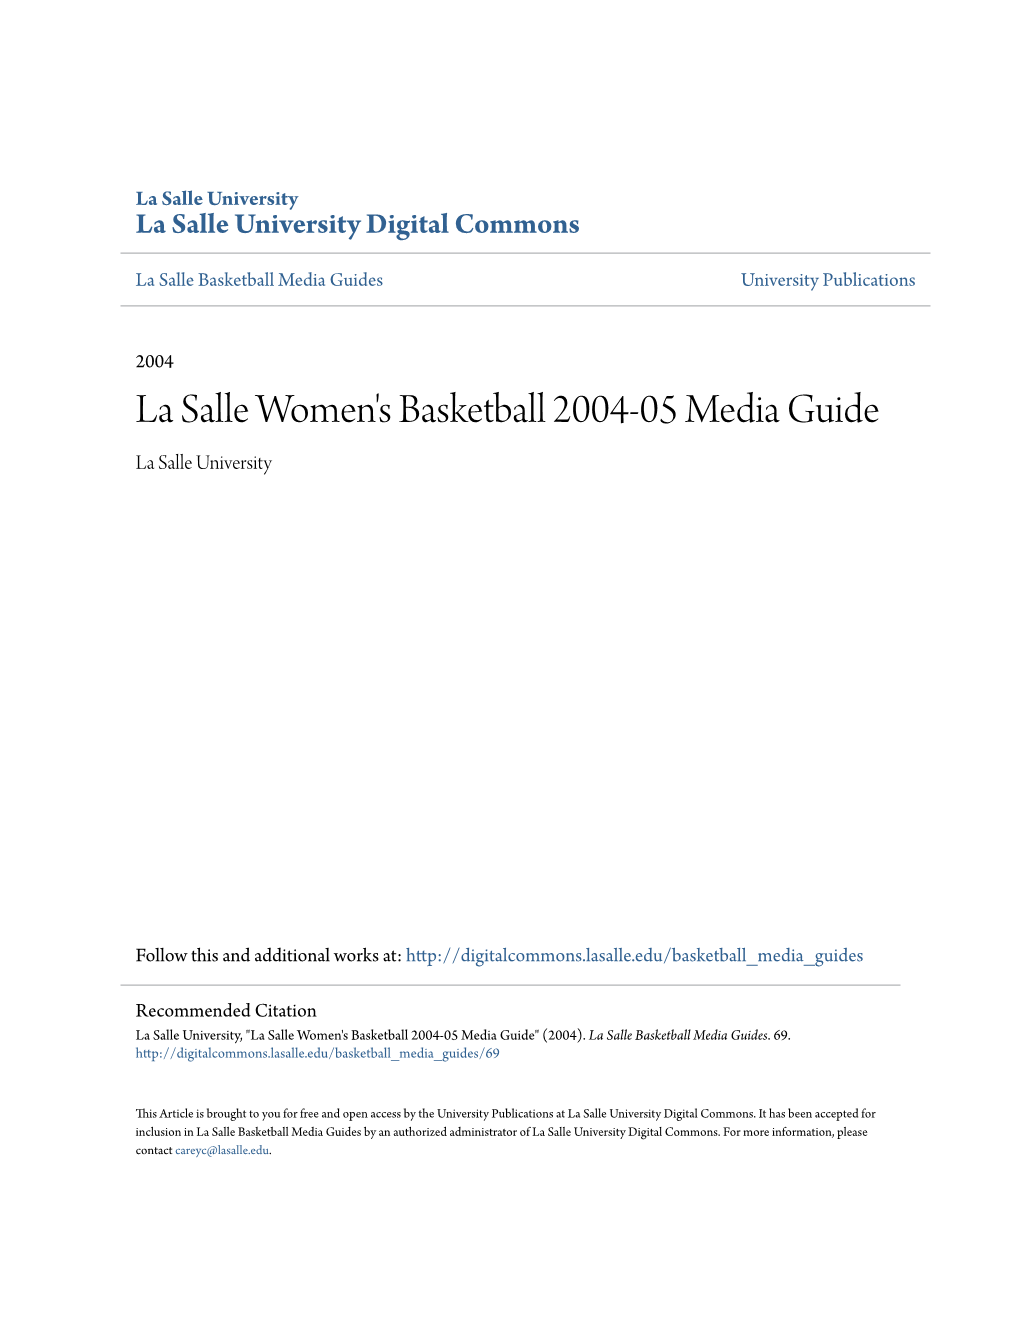 La Salle Women's Basketball 2004-05 Media Guide La Salle University